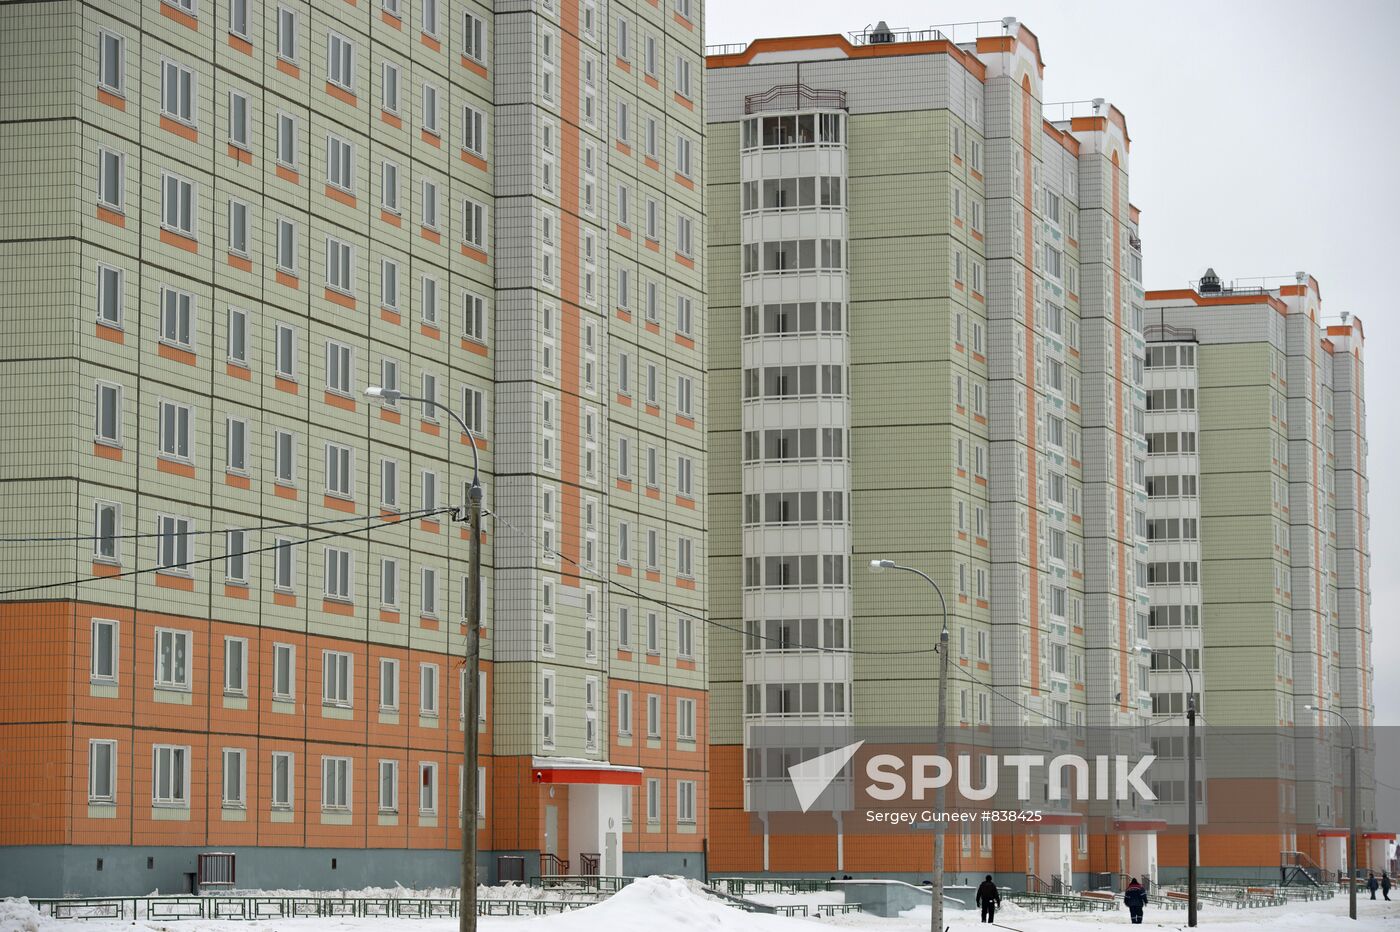 Newly built residential district in Podolsk